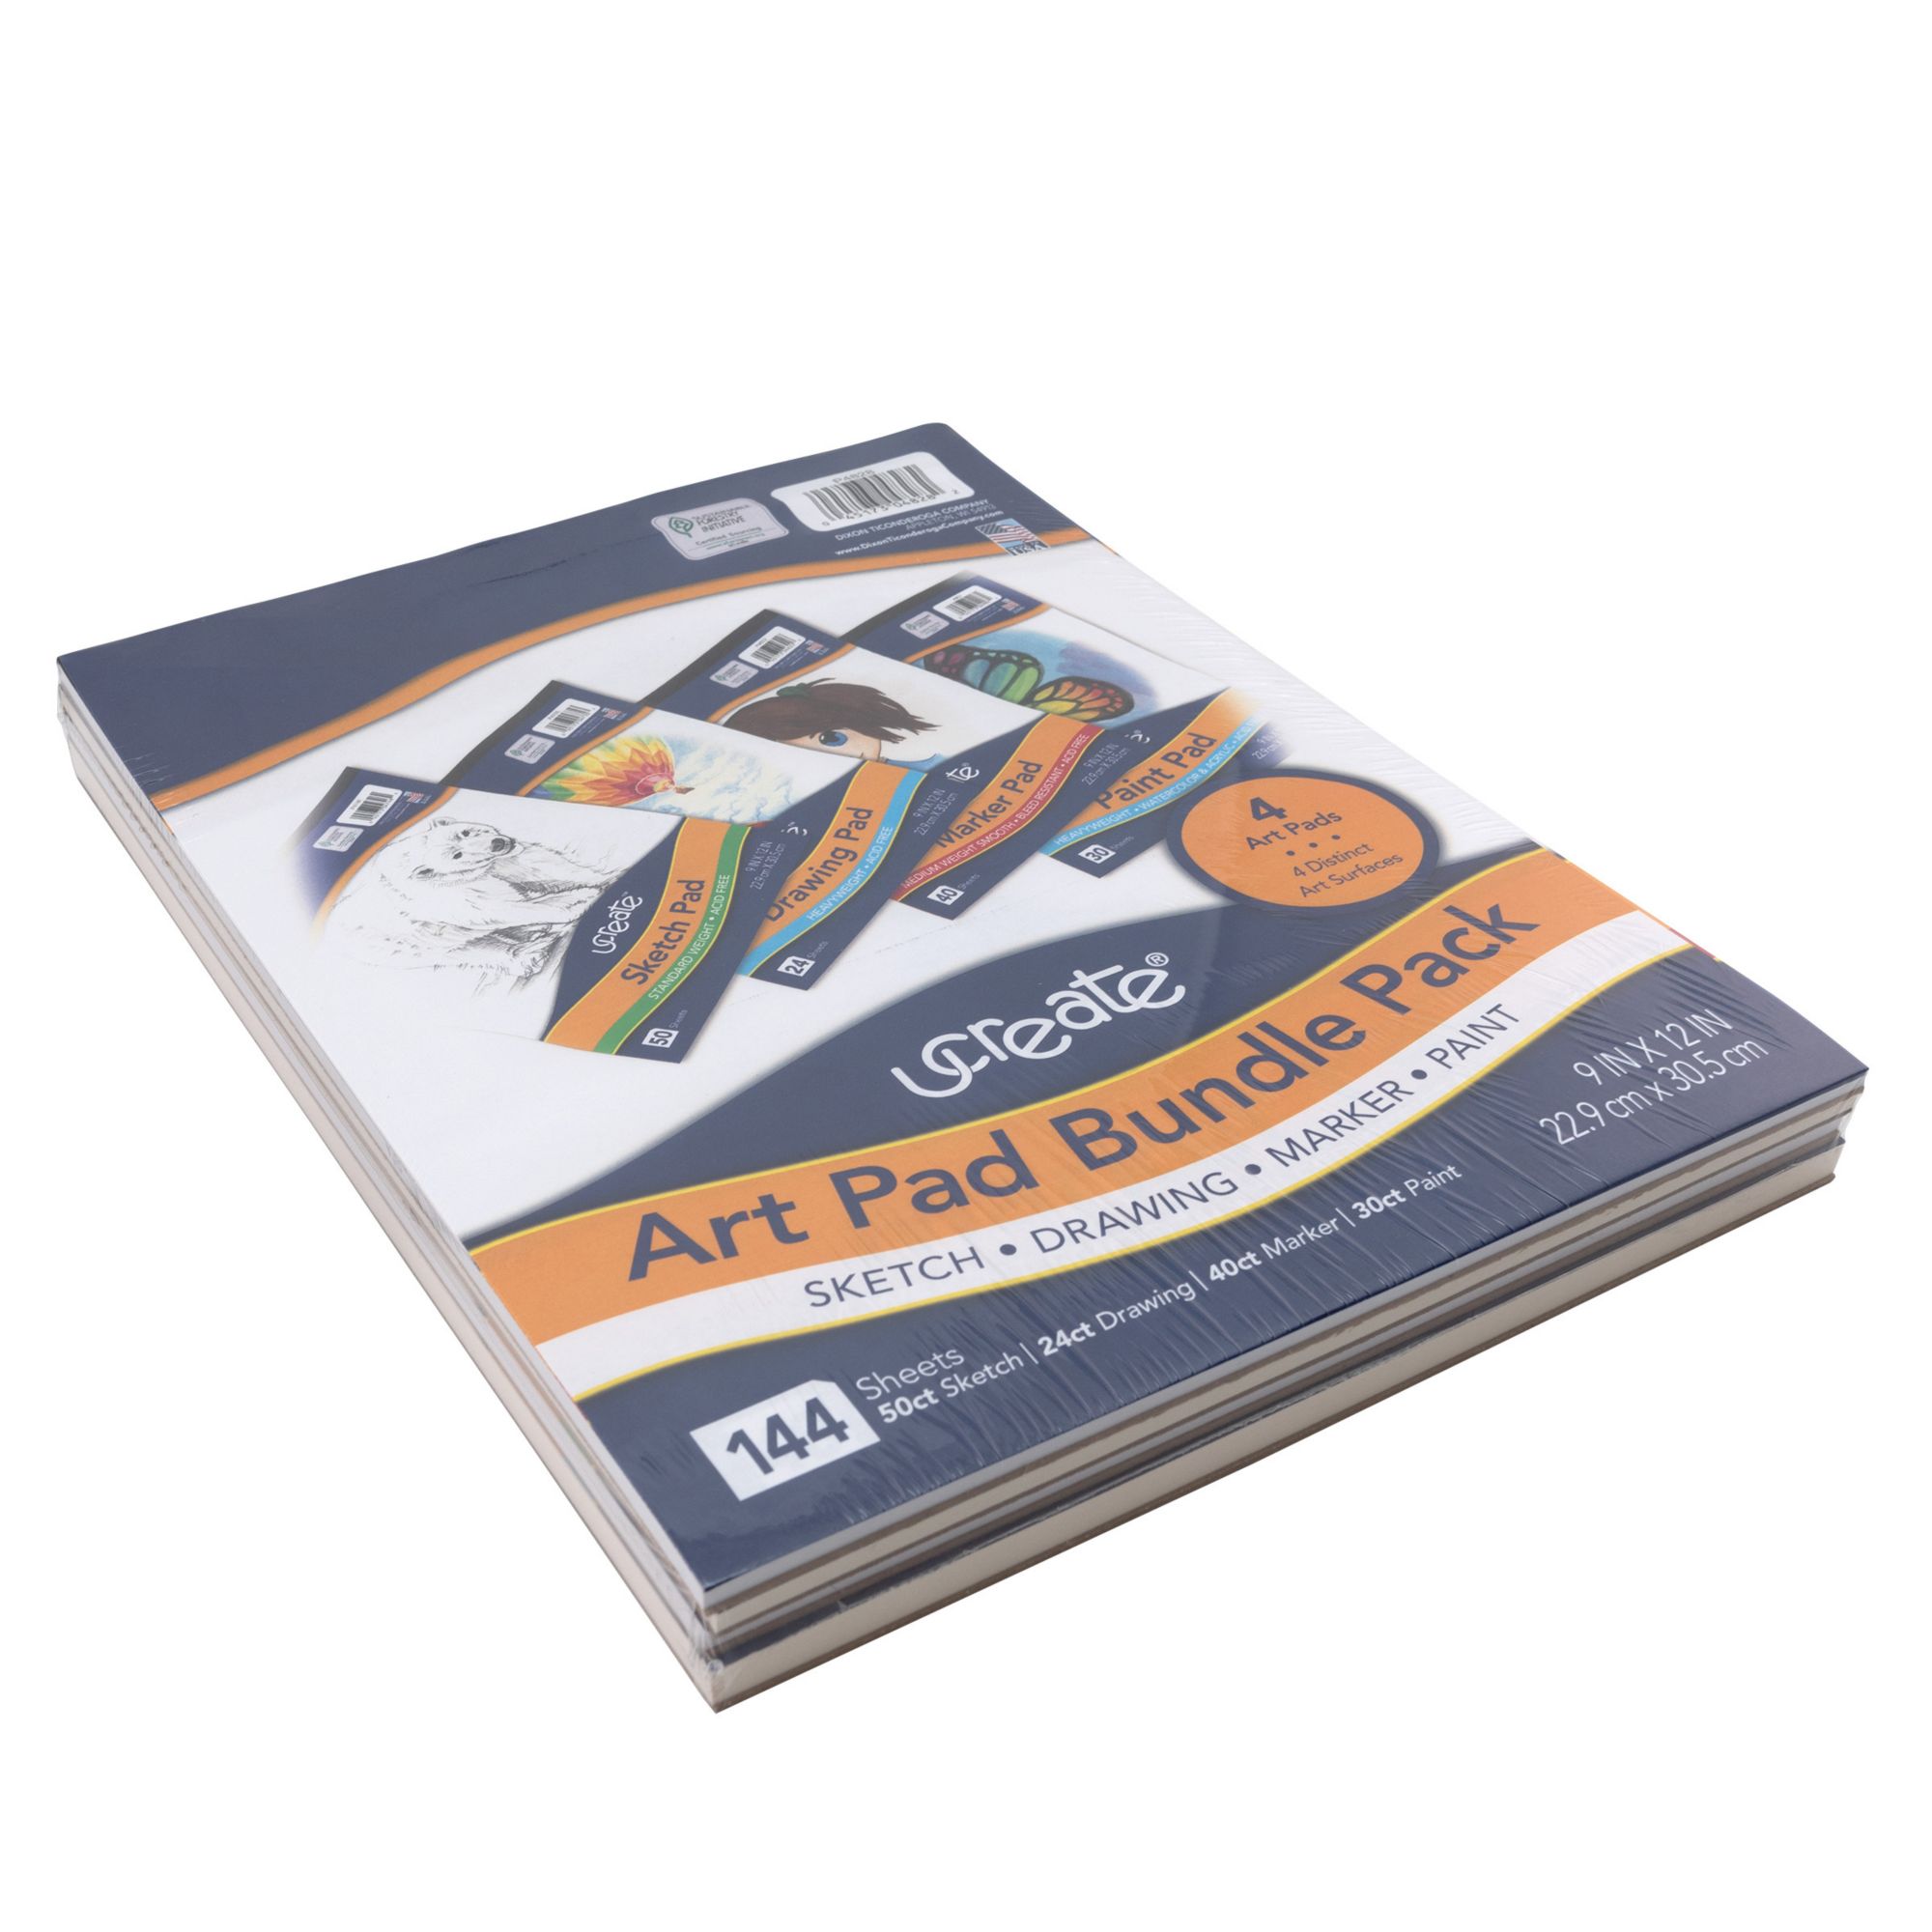 Wholesale Premium Sketch Pad – BLU School Supplies